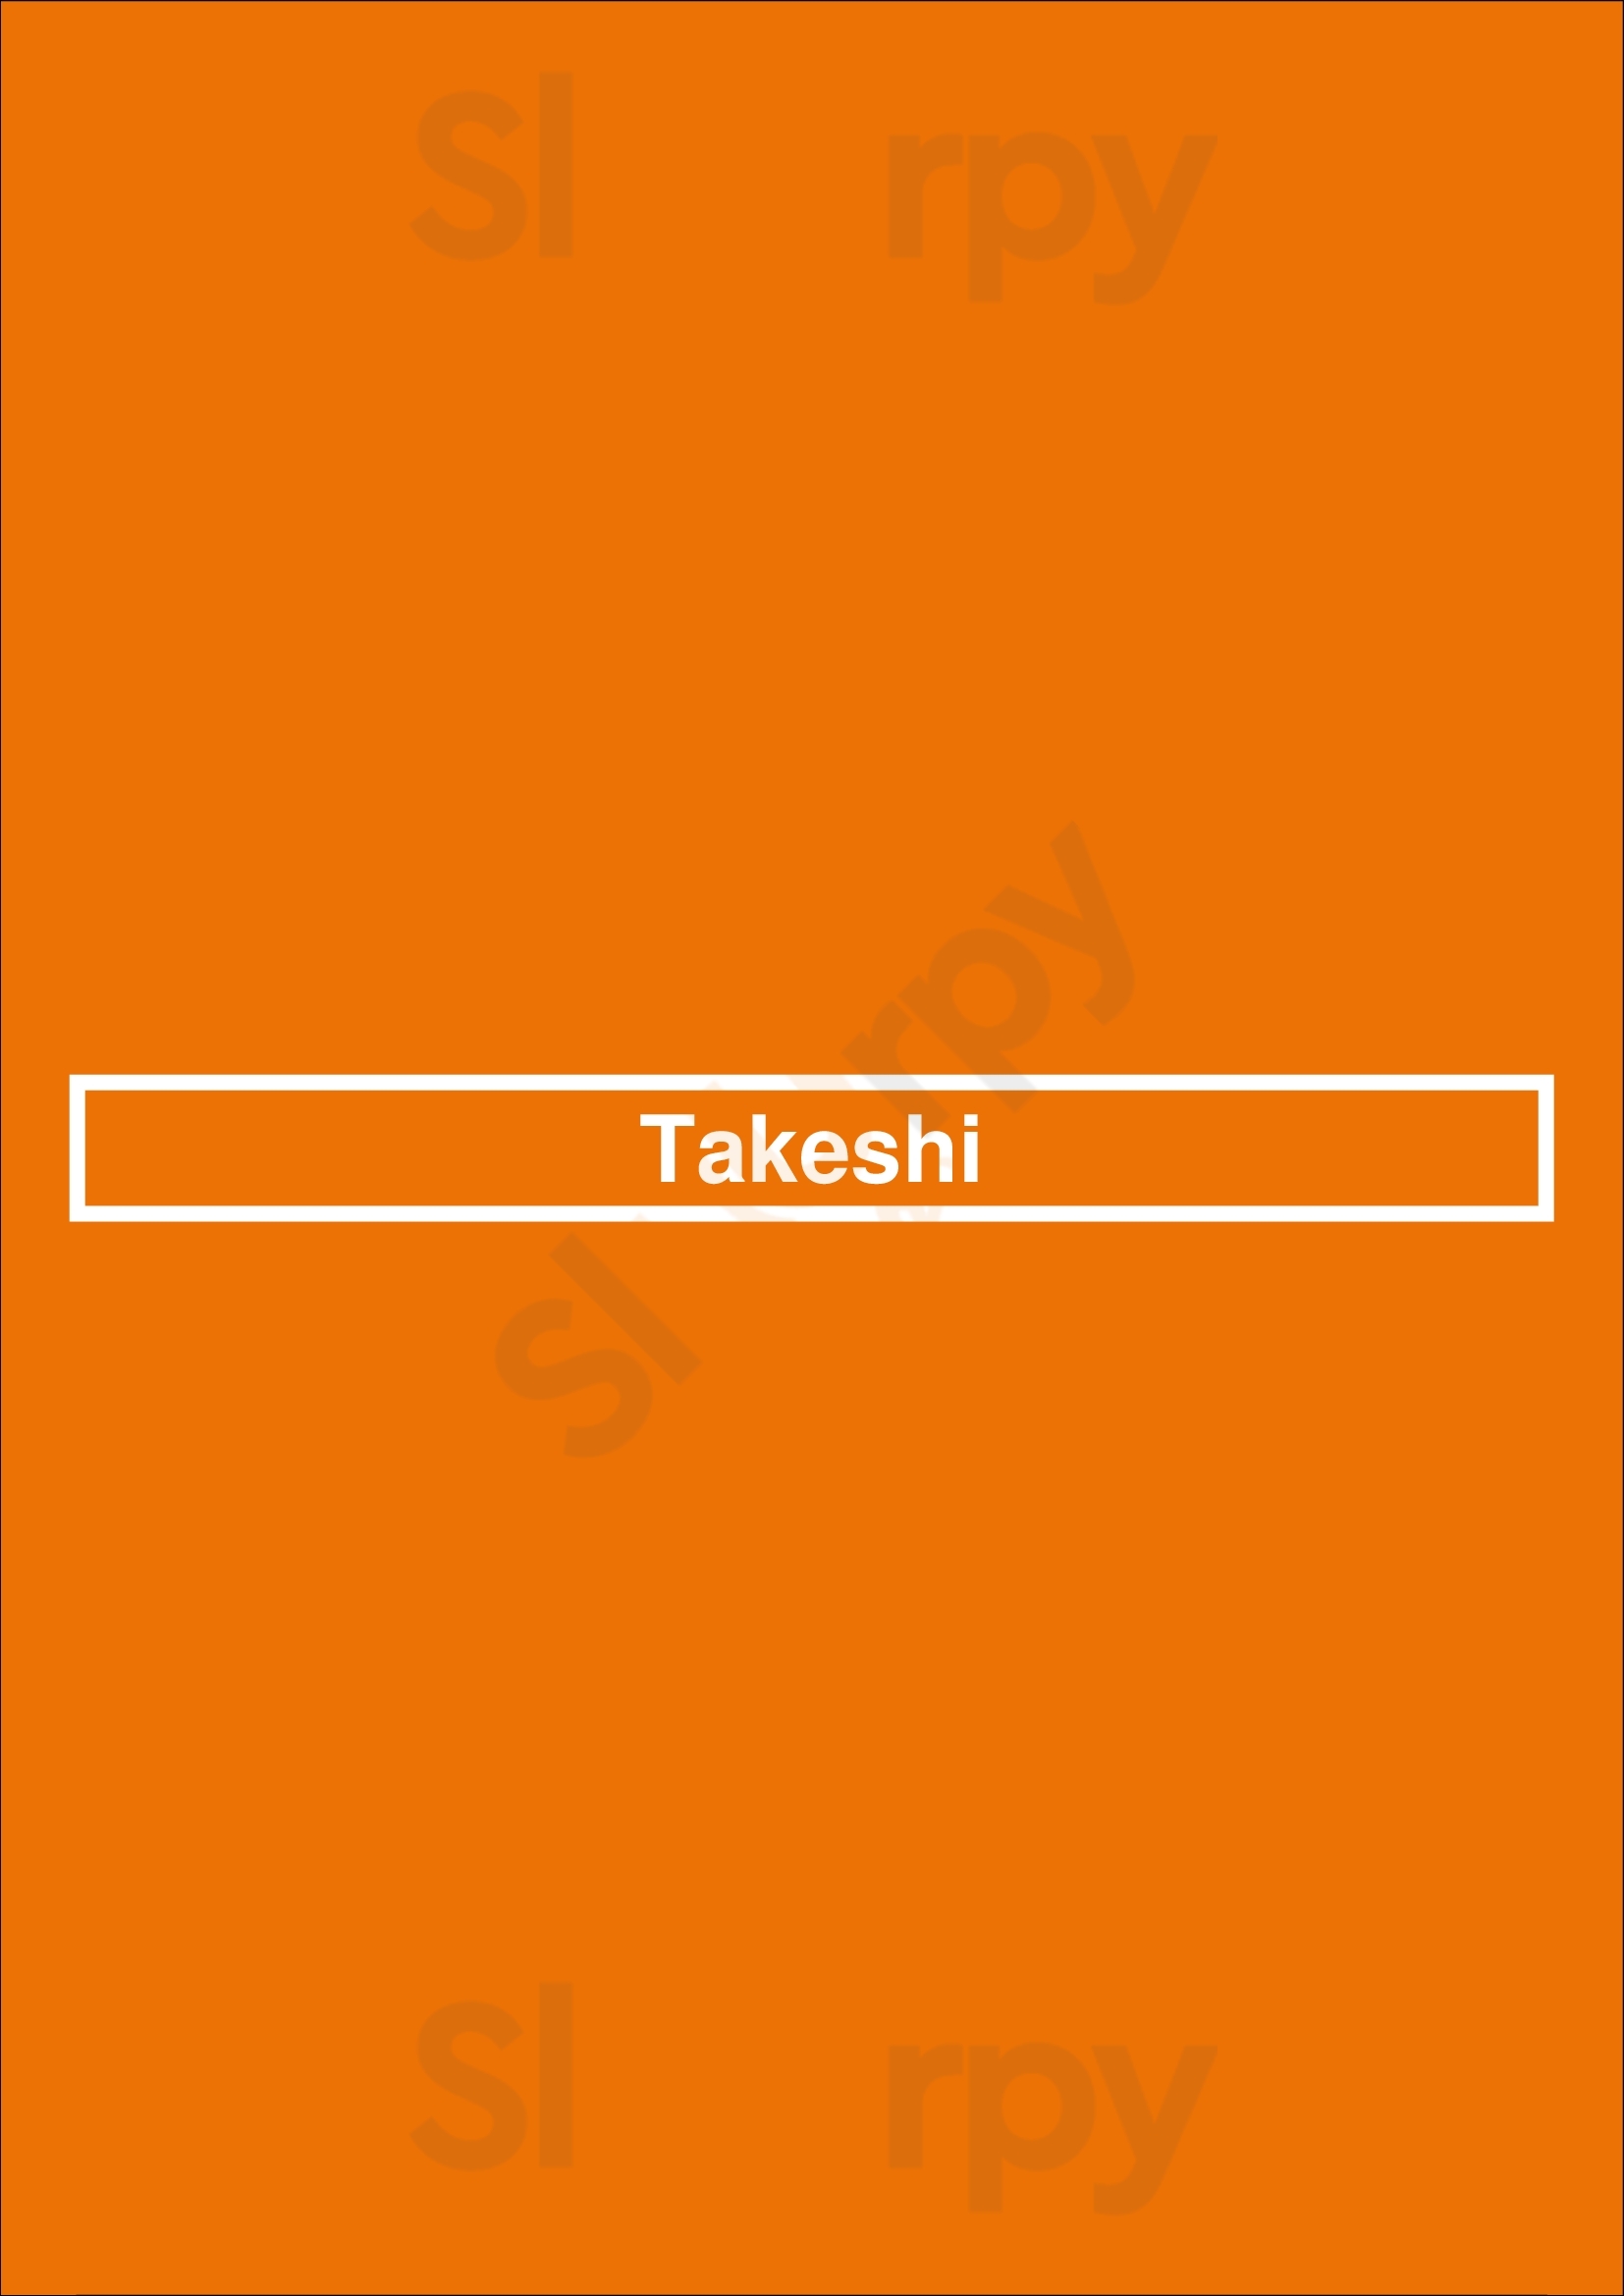 Takeshi London Menu - 1